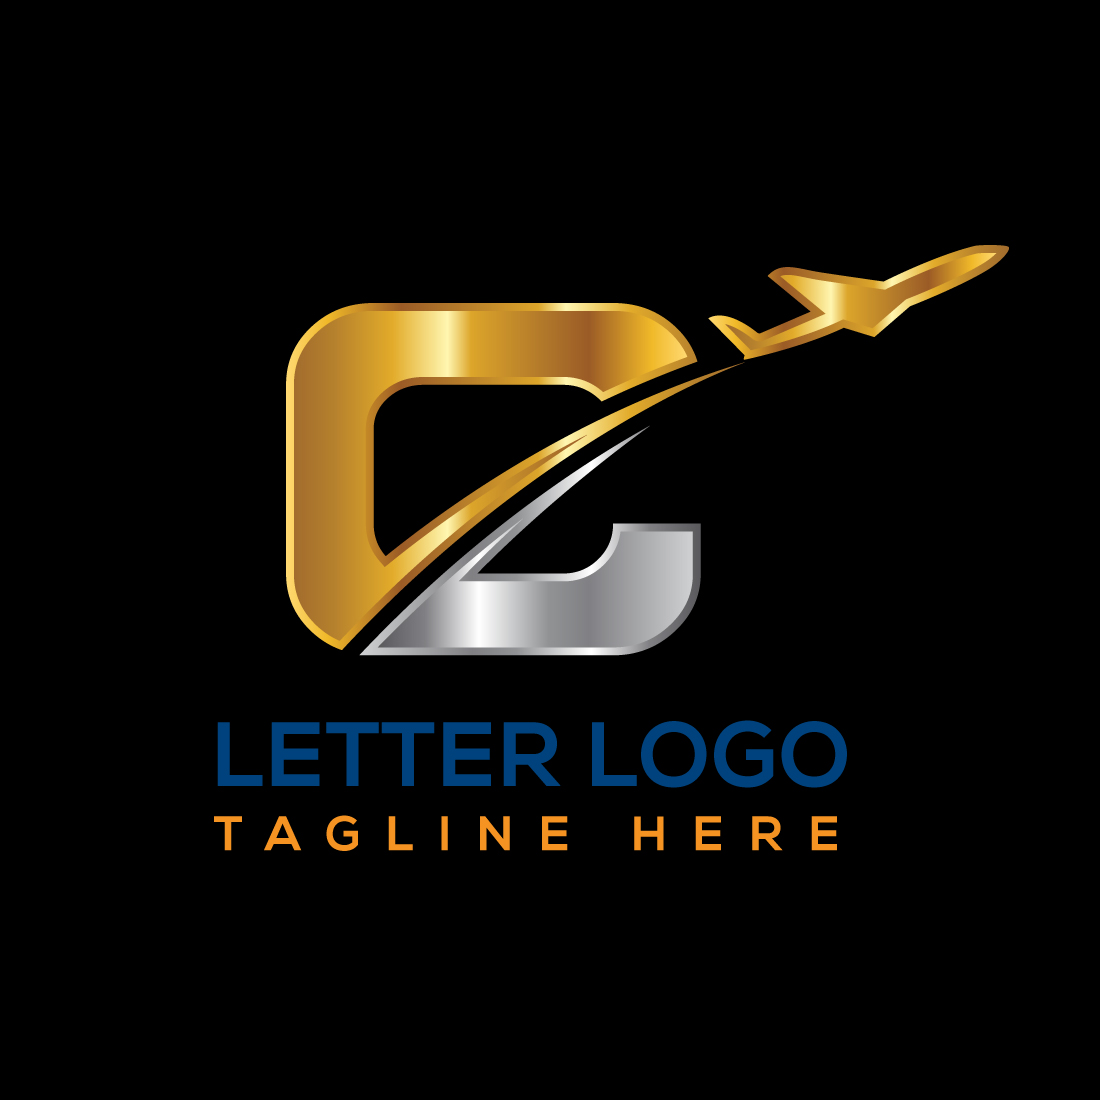 Airplane Letter C Logo Design cover image.